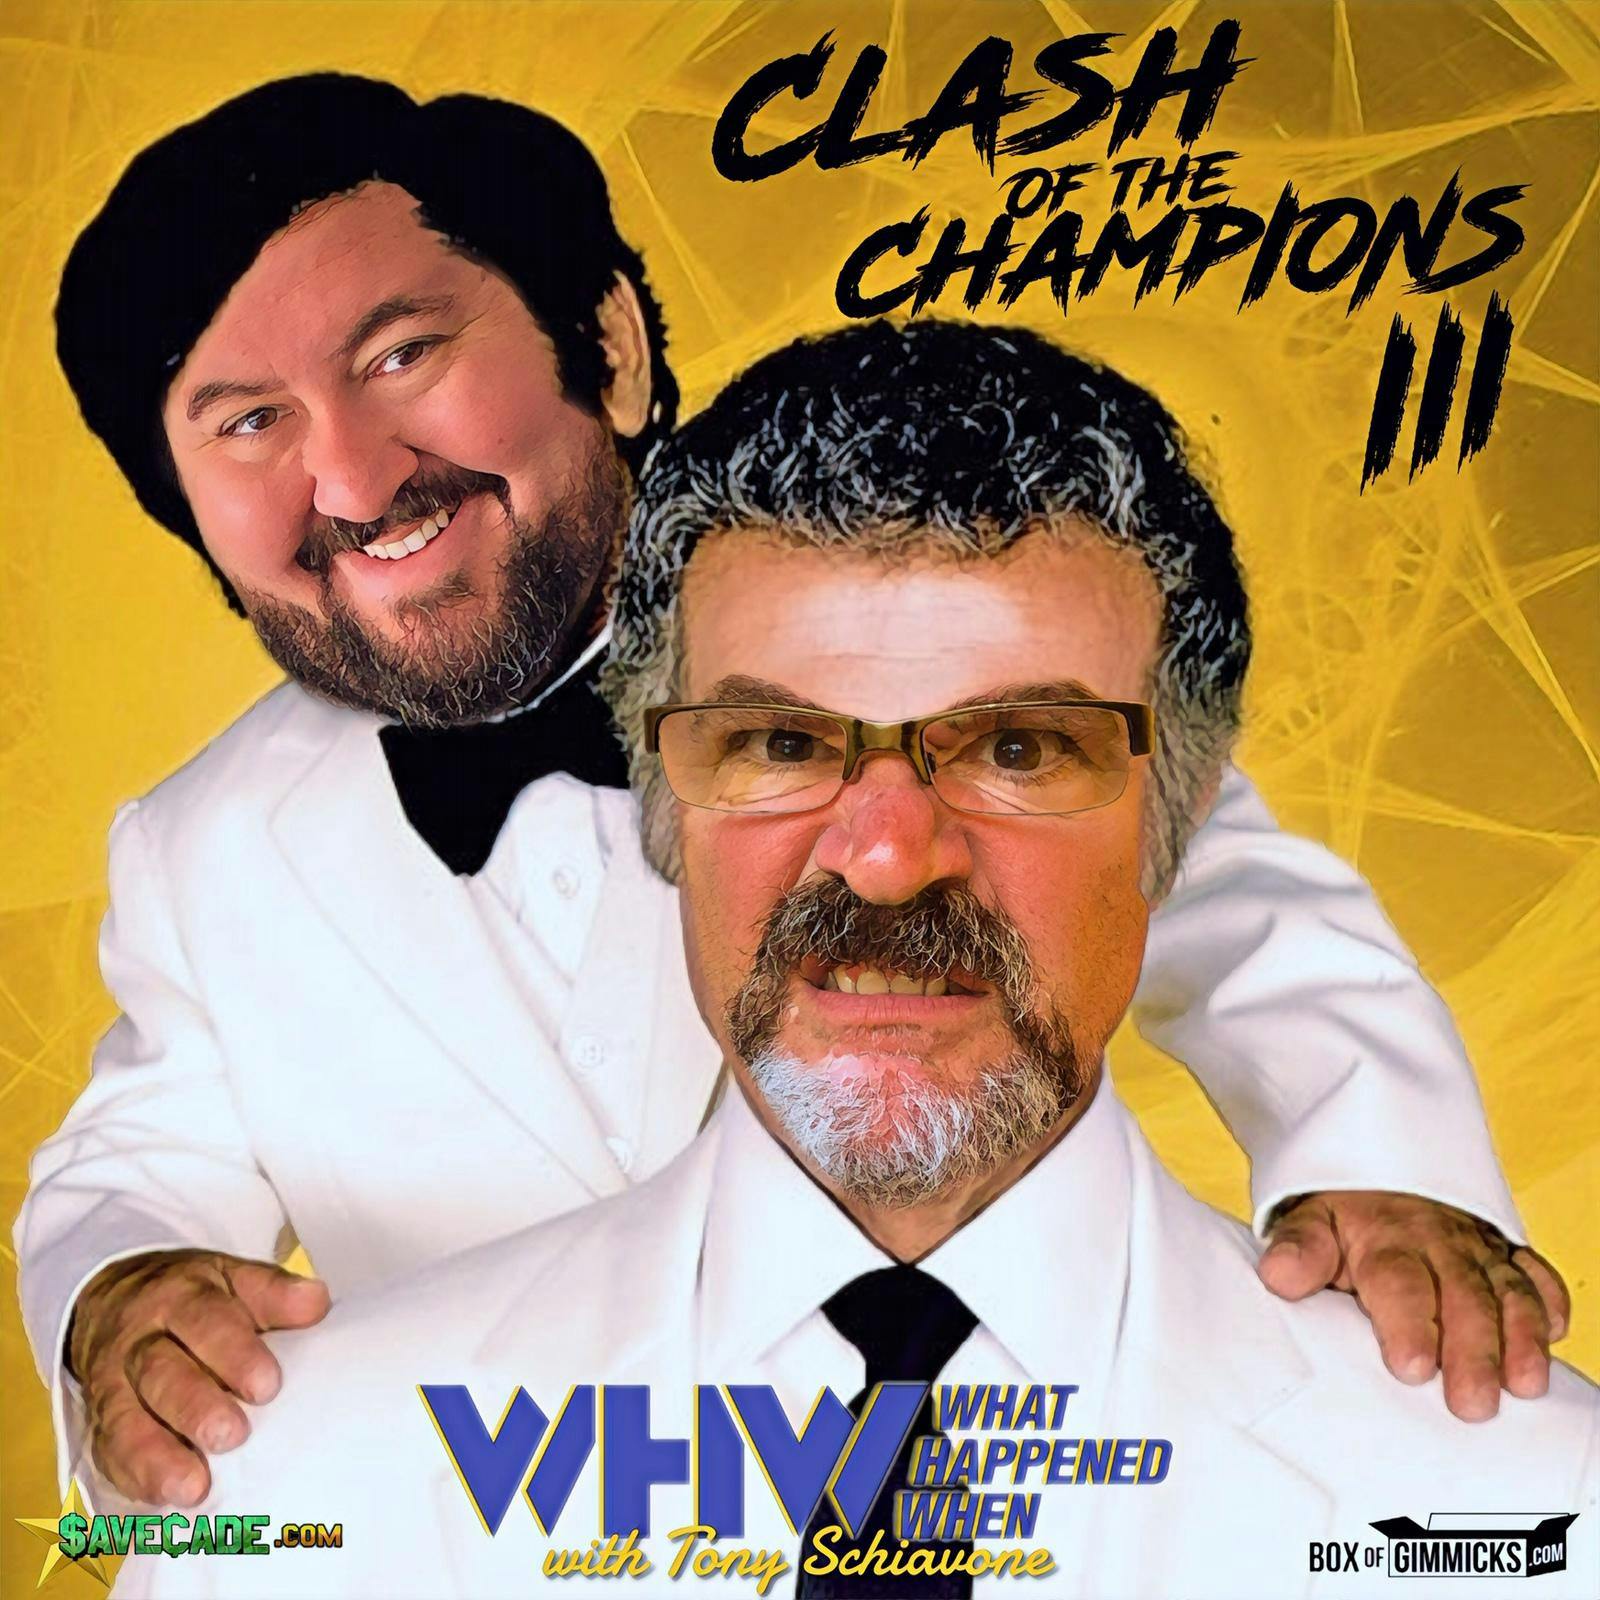 112: 112: Clash of the Champions III